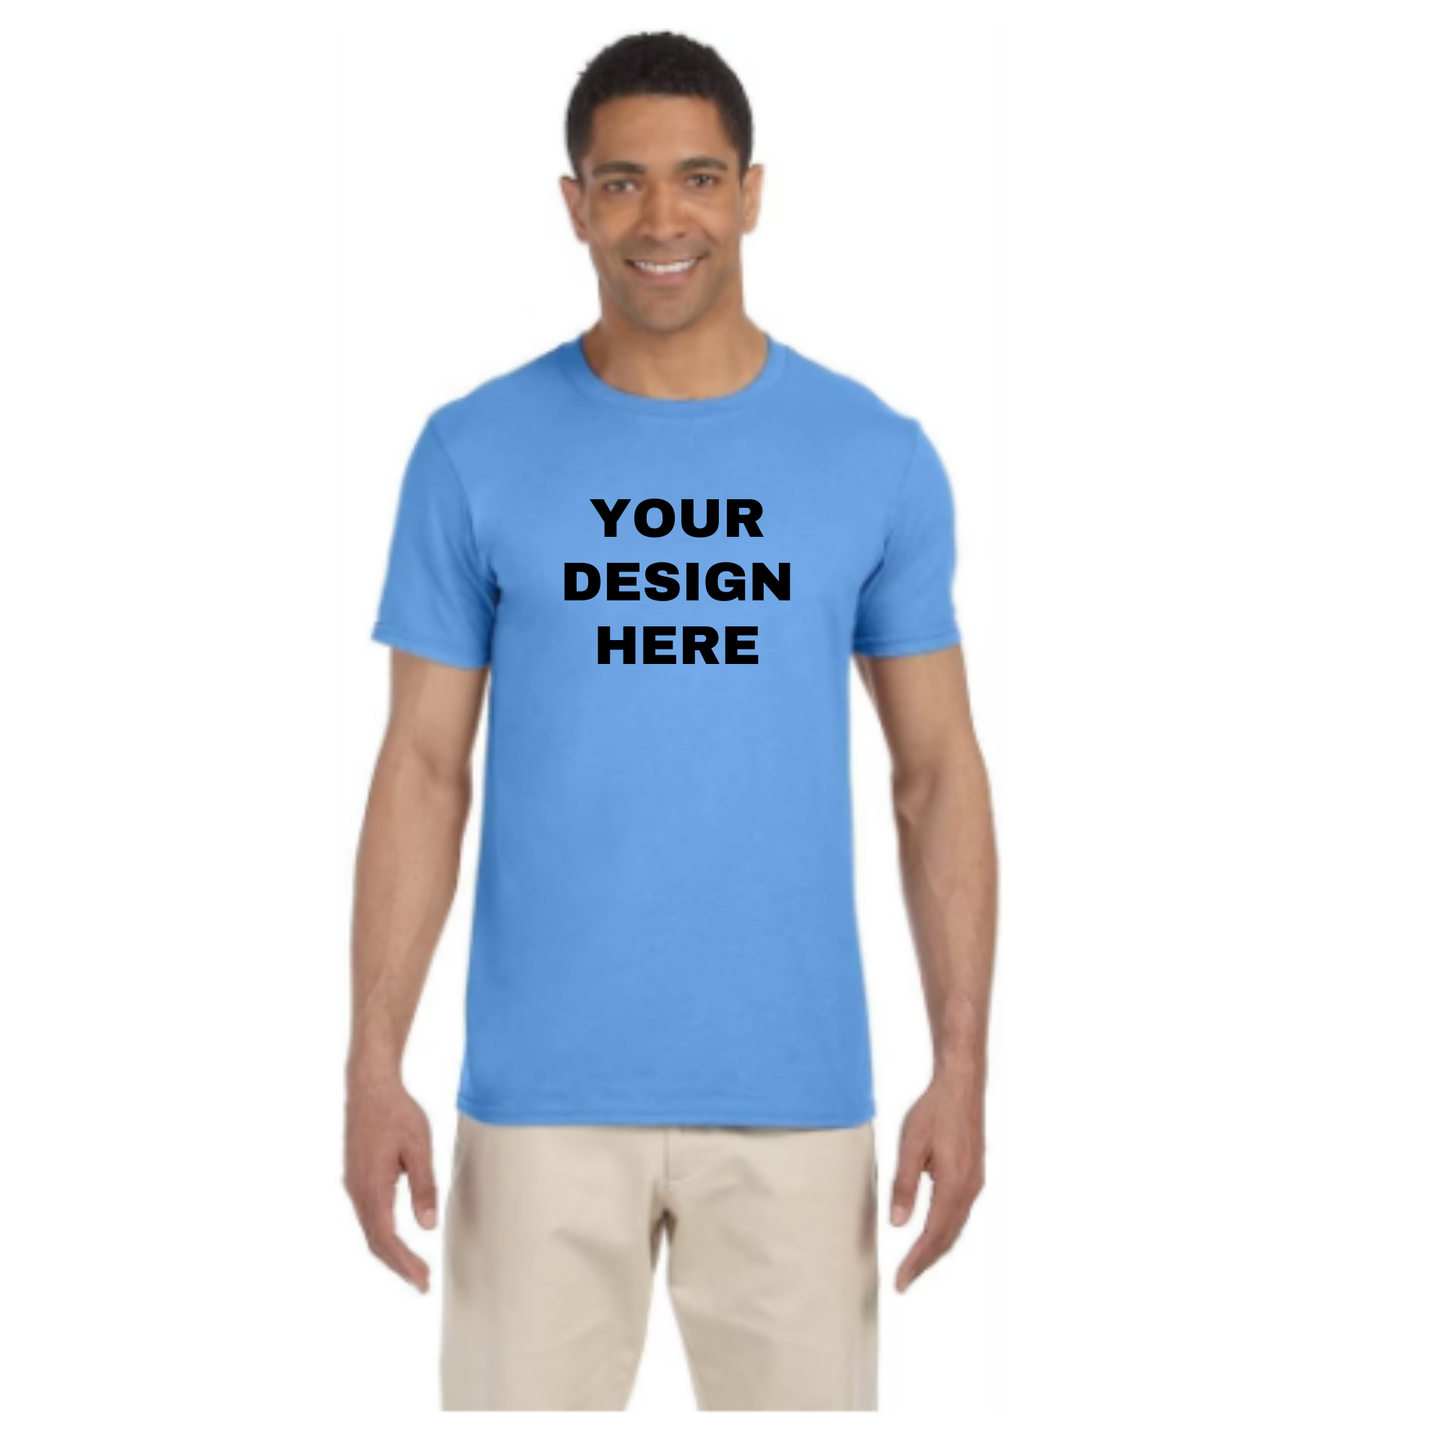 Gildan Adult Unisex Softstyle Short Sleeve T-Shirt